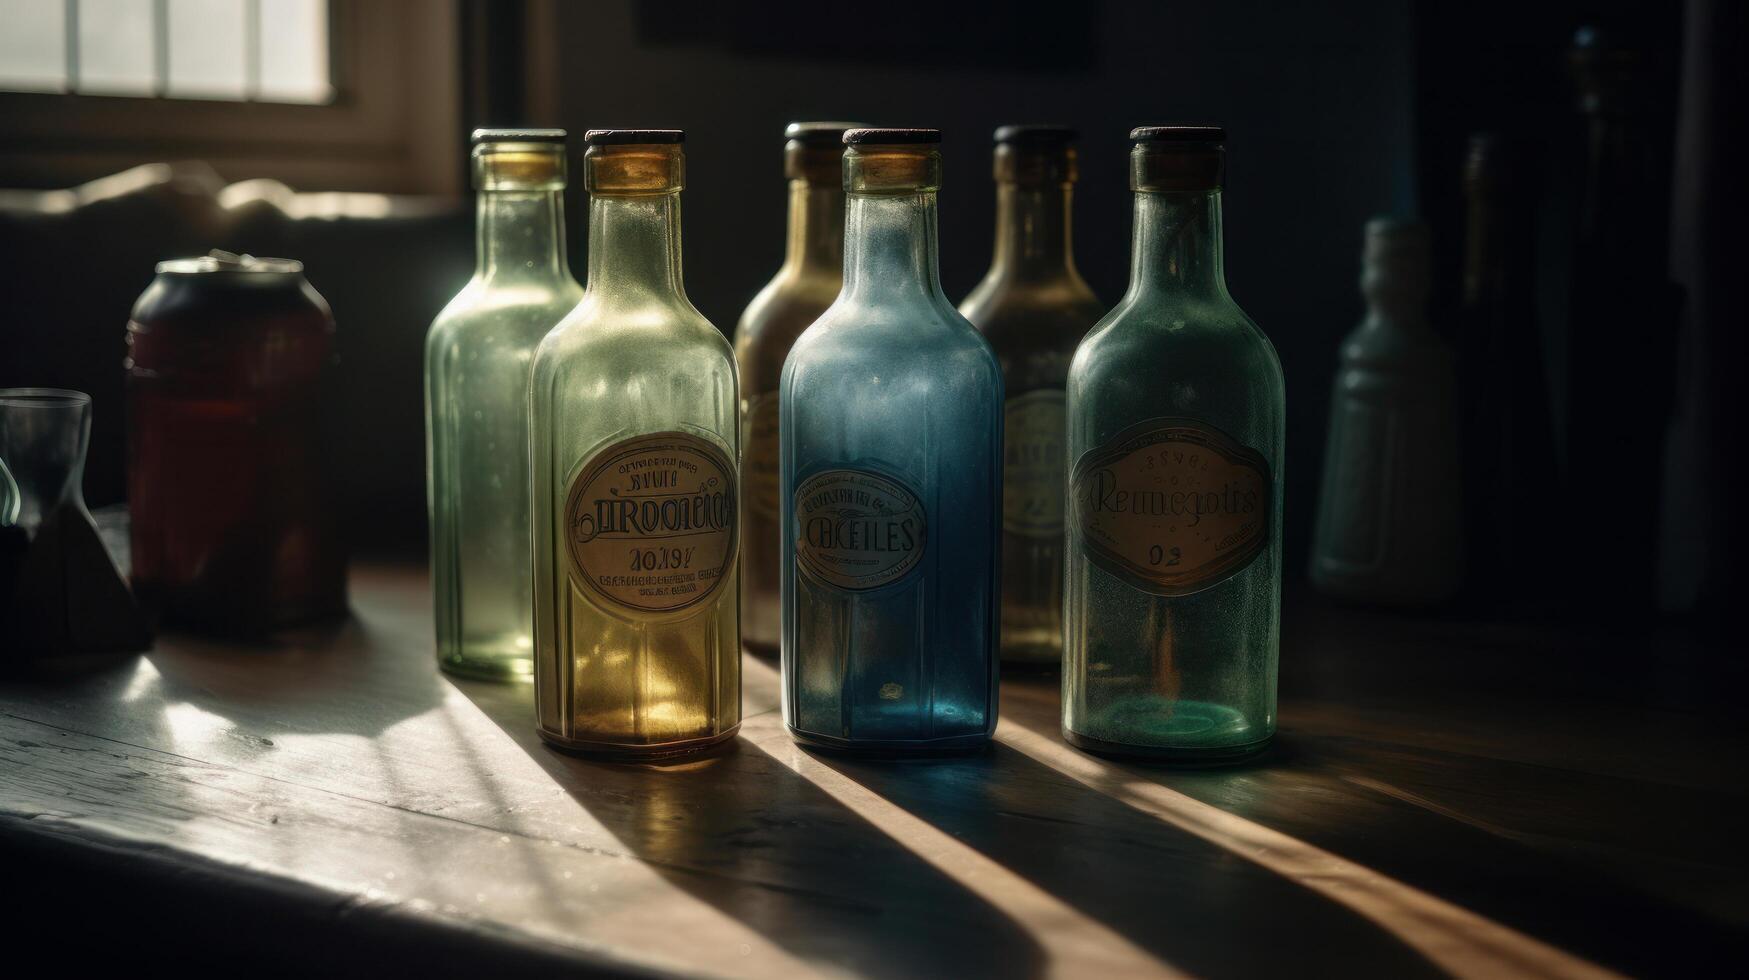 Vintage bottles collection. Illustration photo